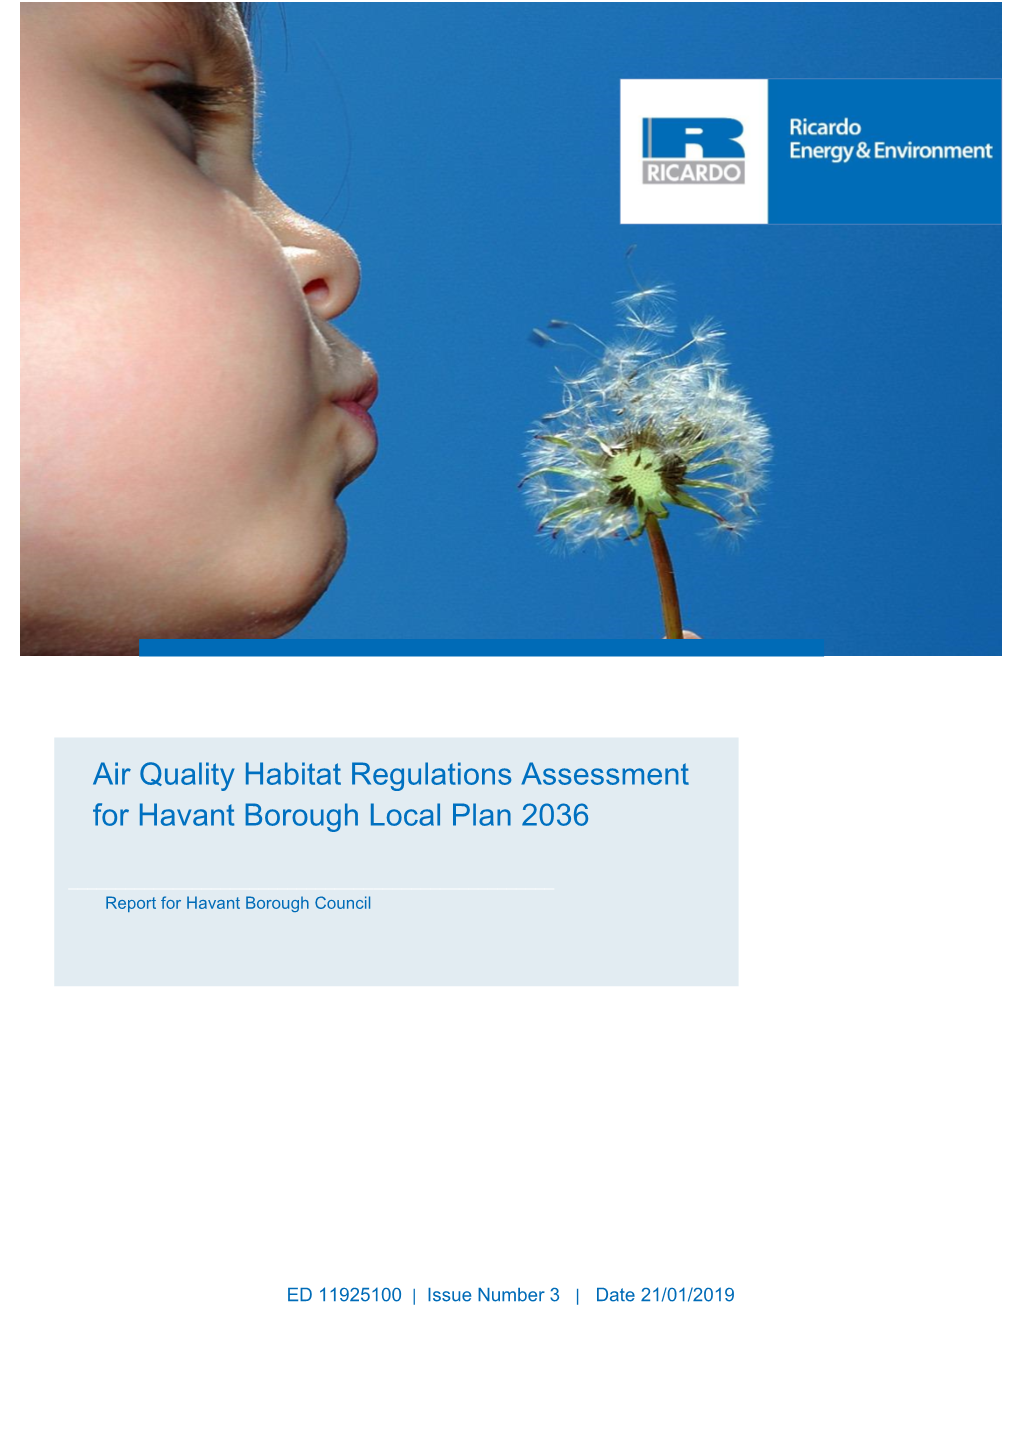 Air Quality Habitats Regulations Assessment